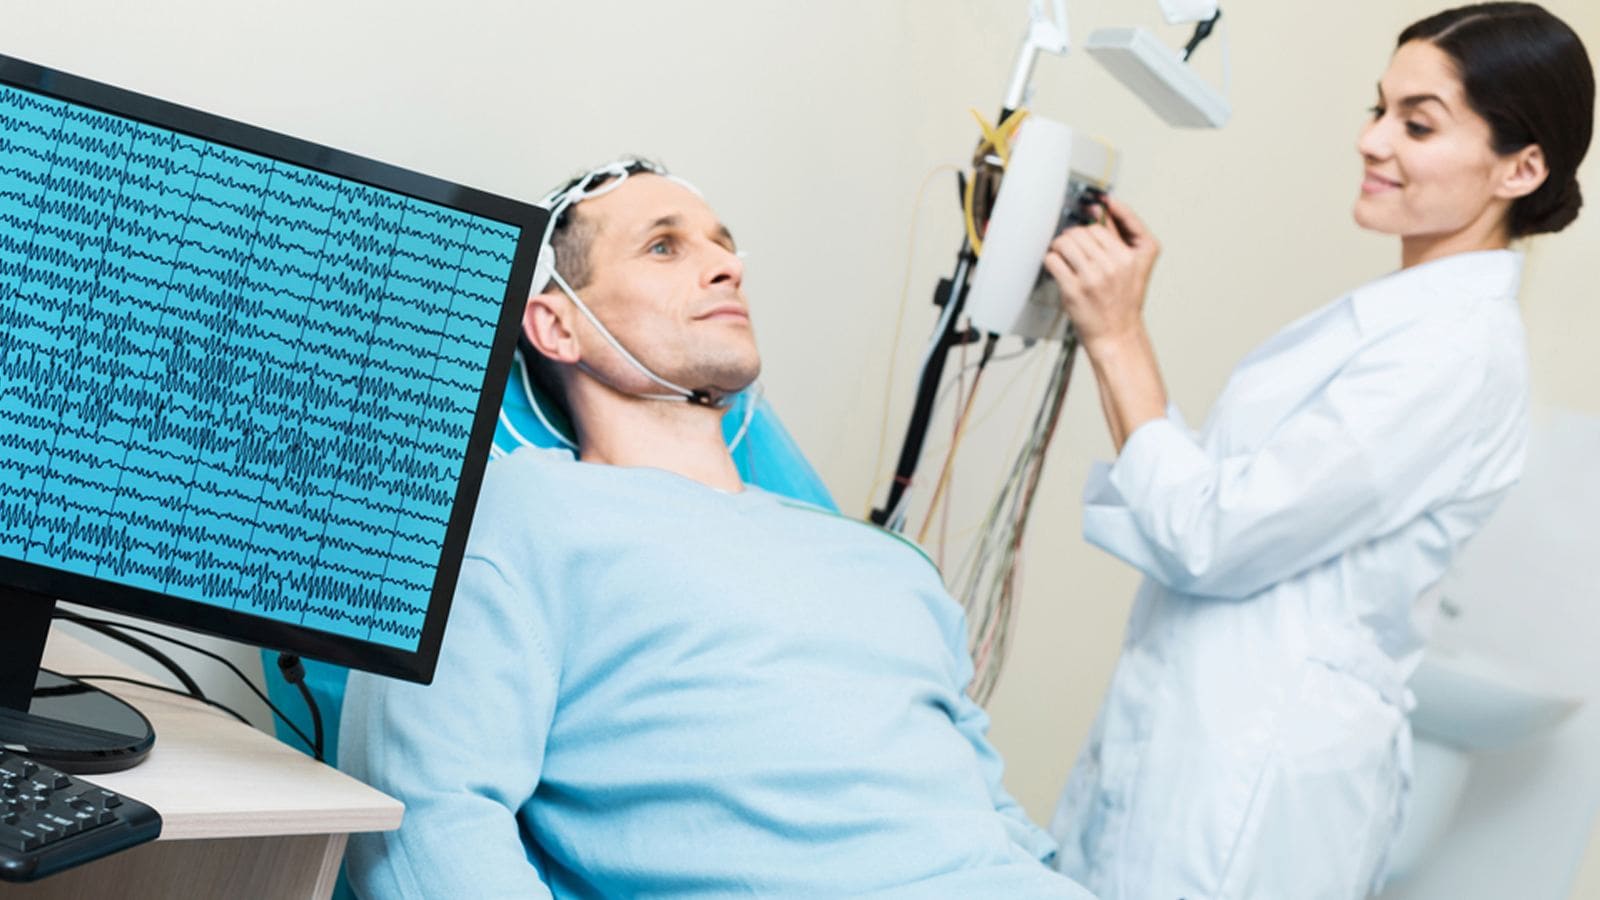 Man on an EEG procedure